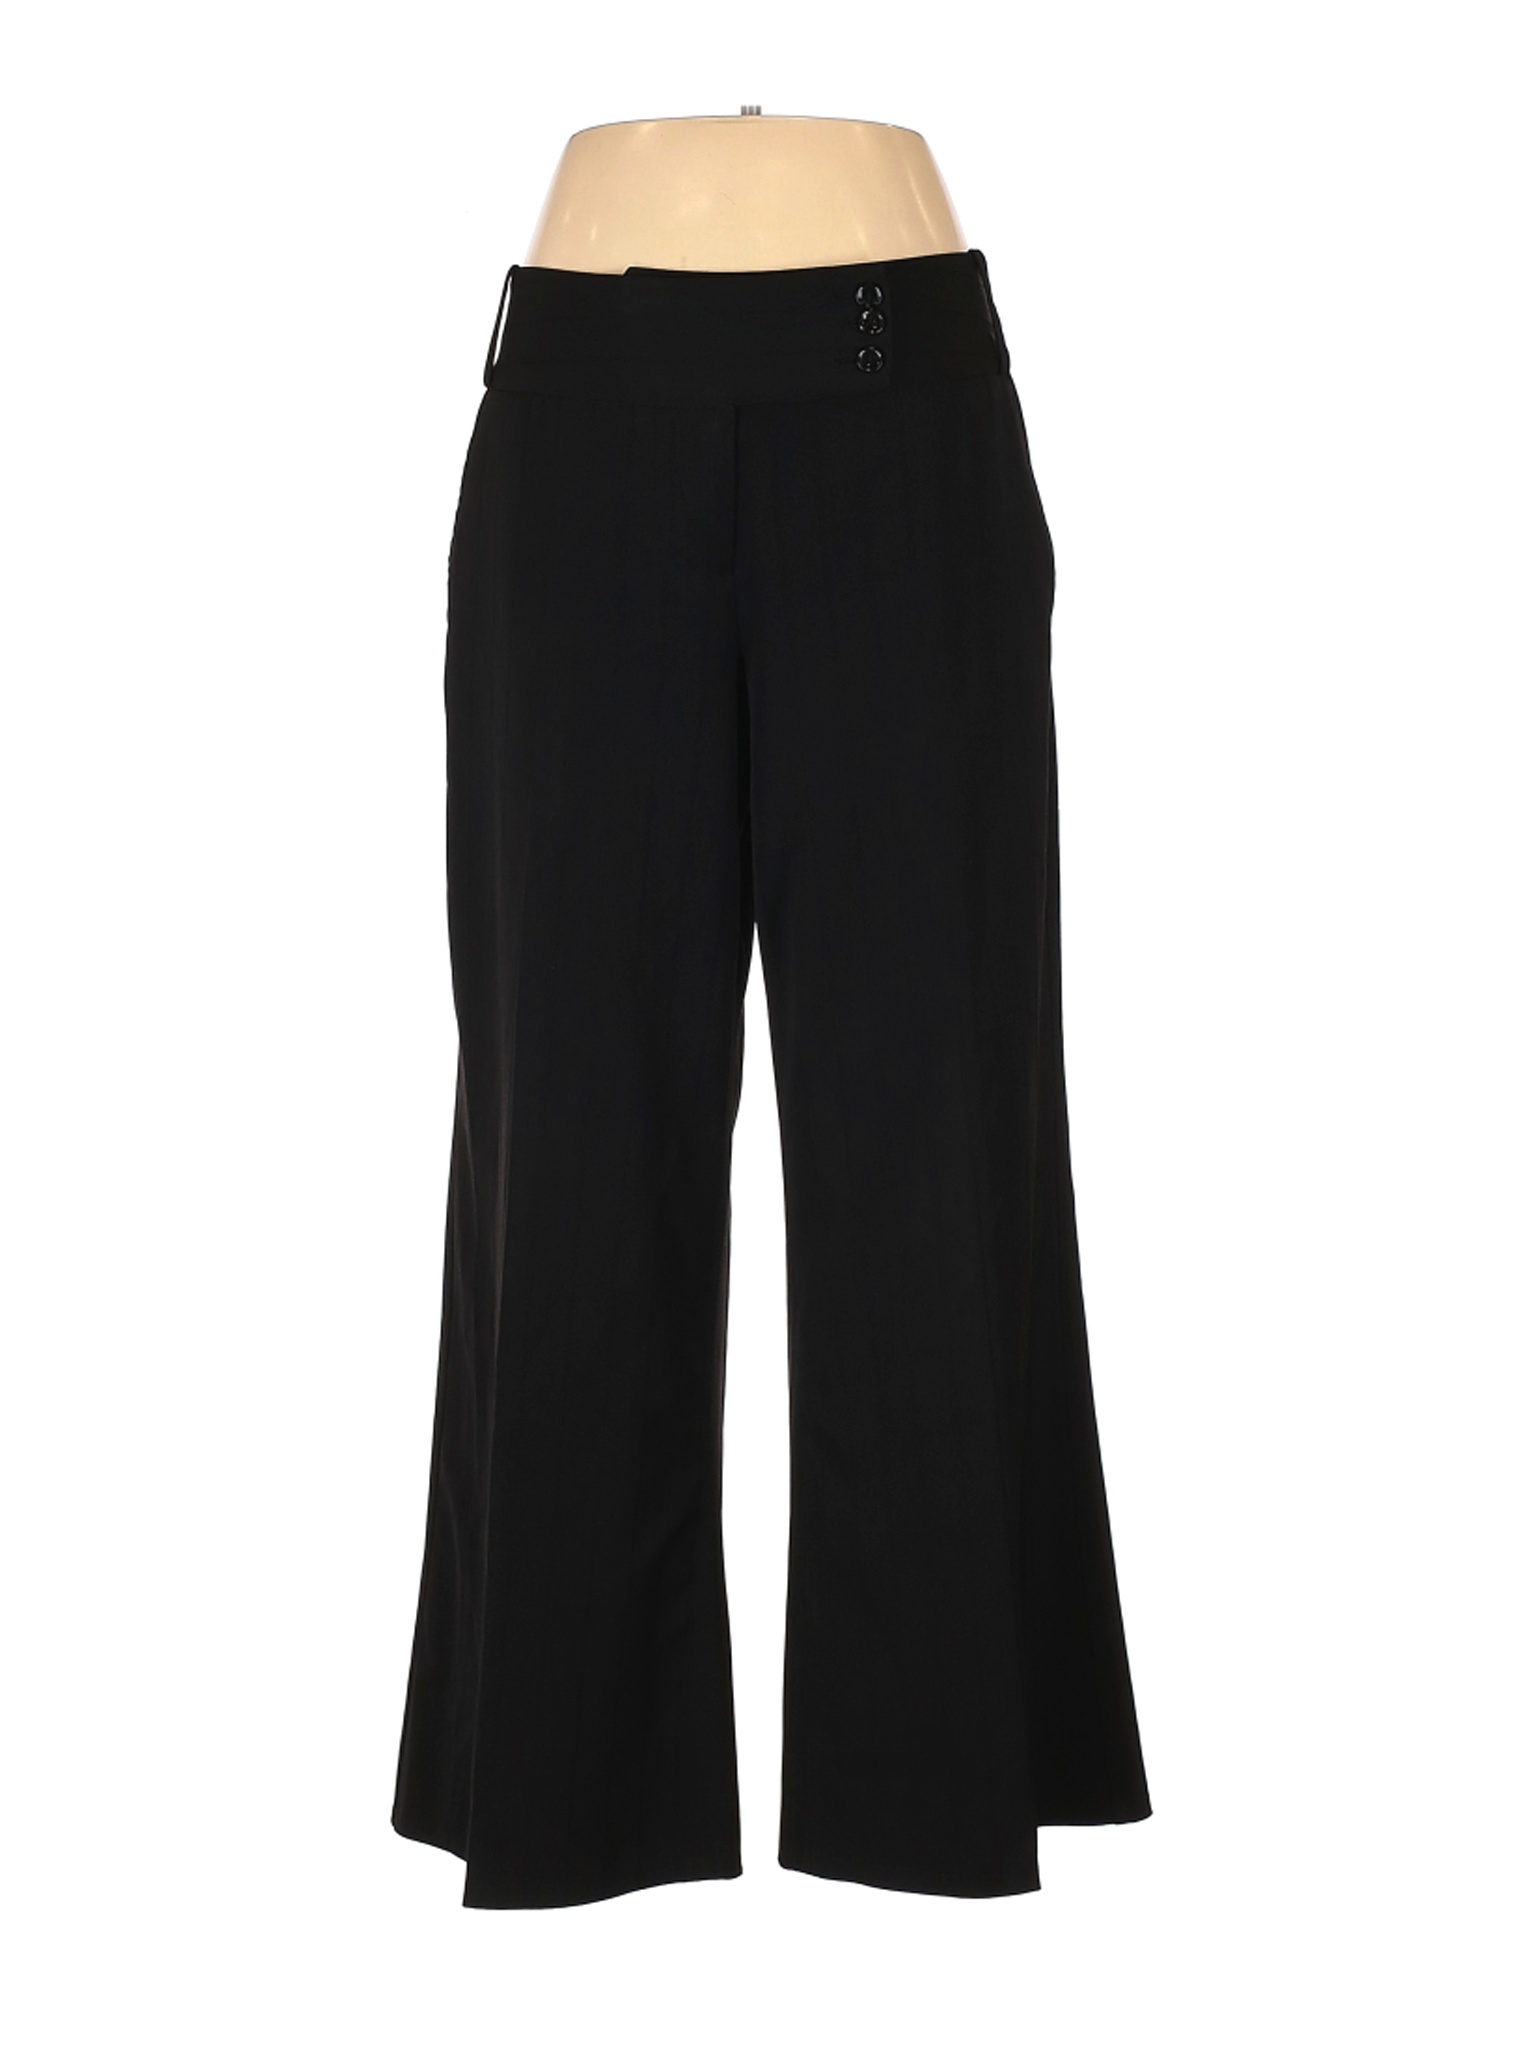 Jenne Maag Women Black Dress Pants 12 | eBay